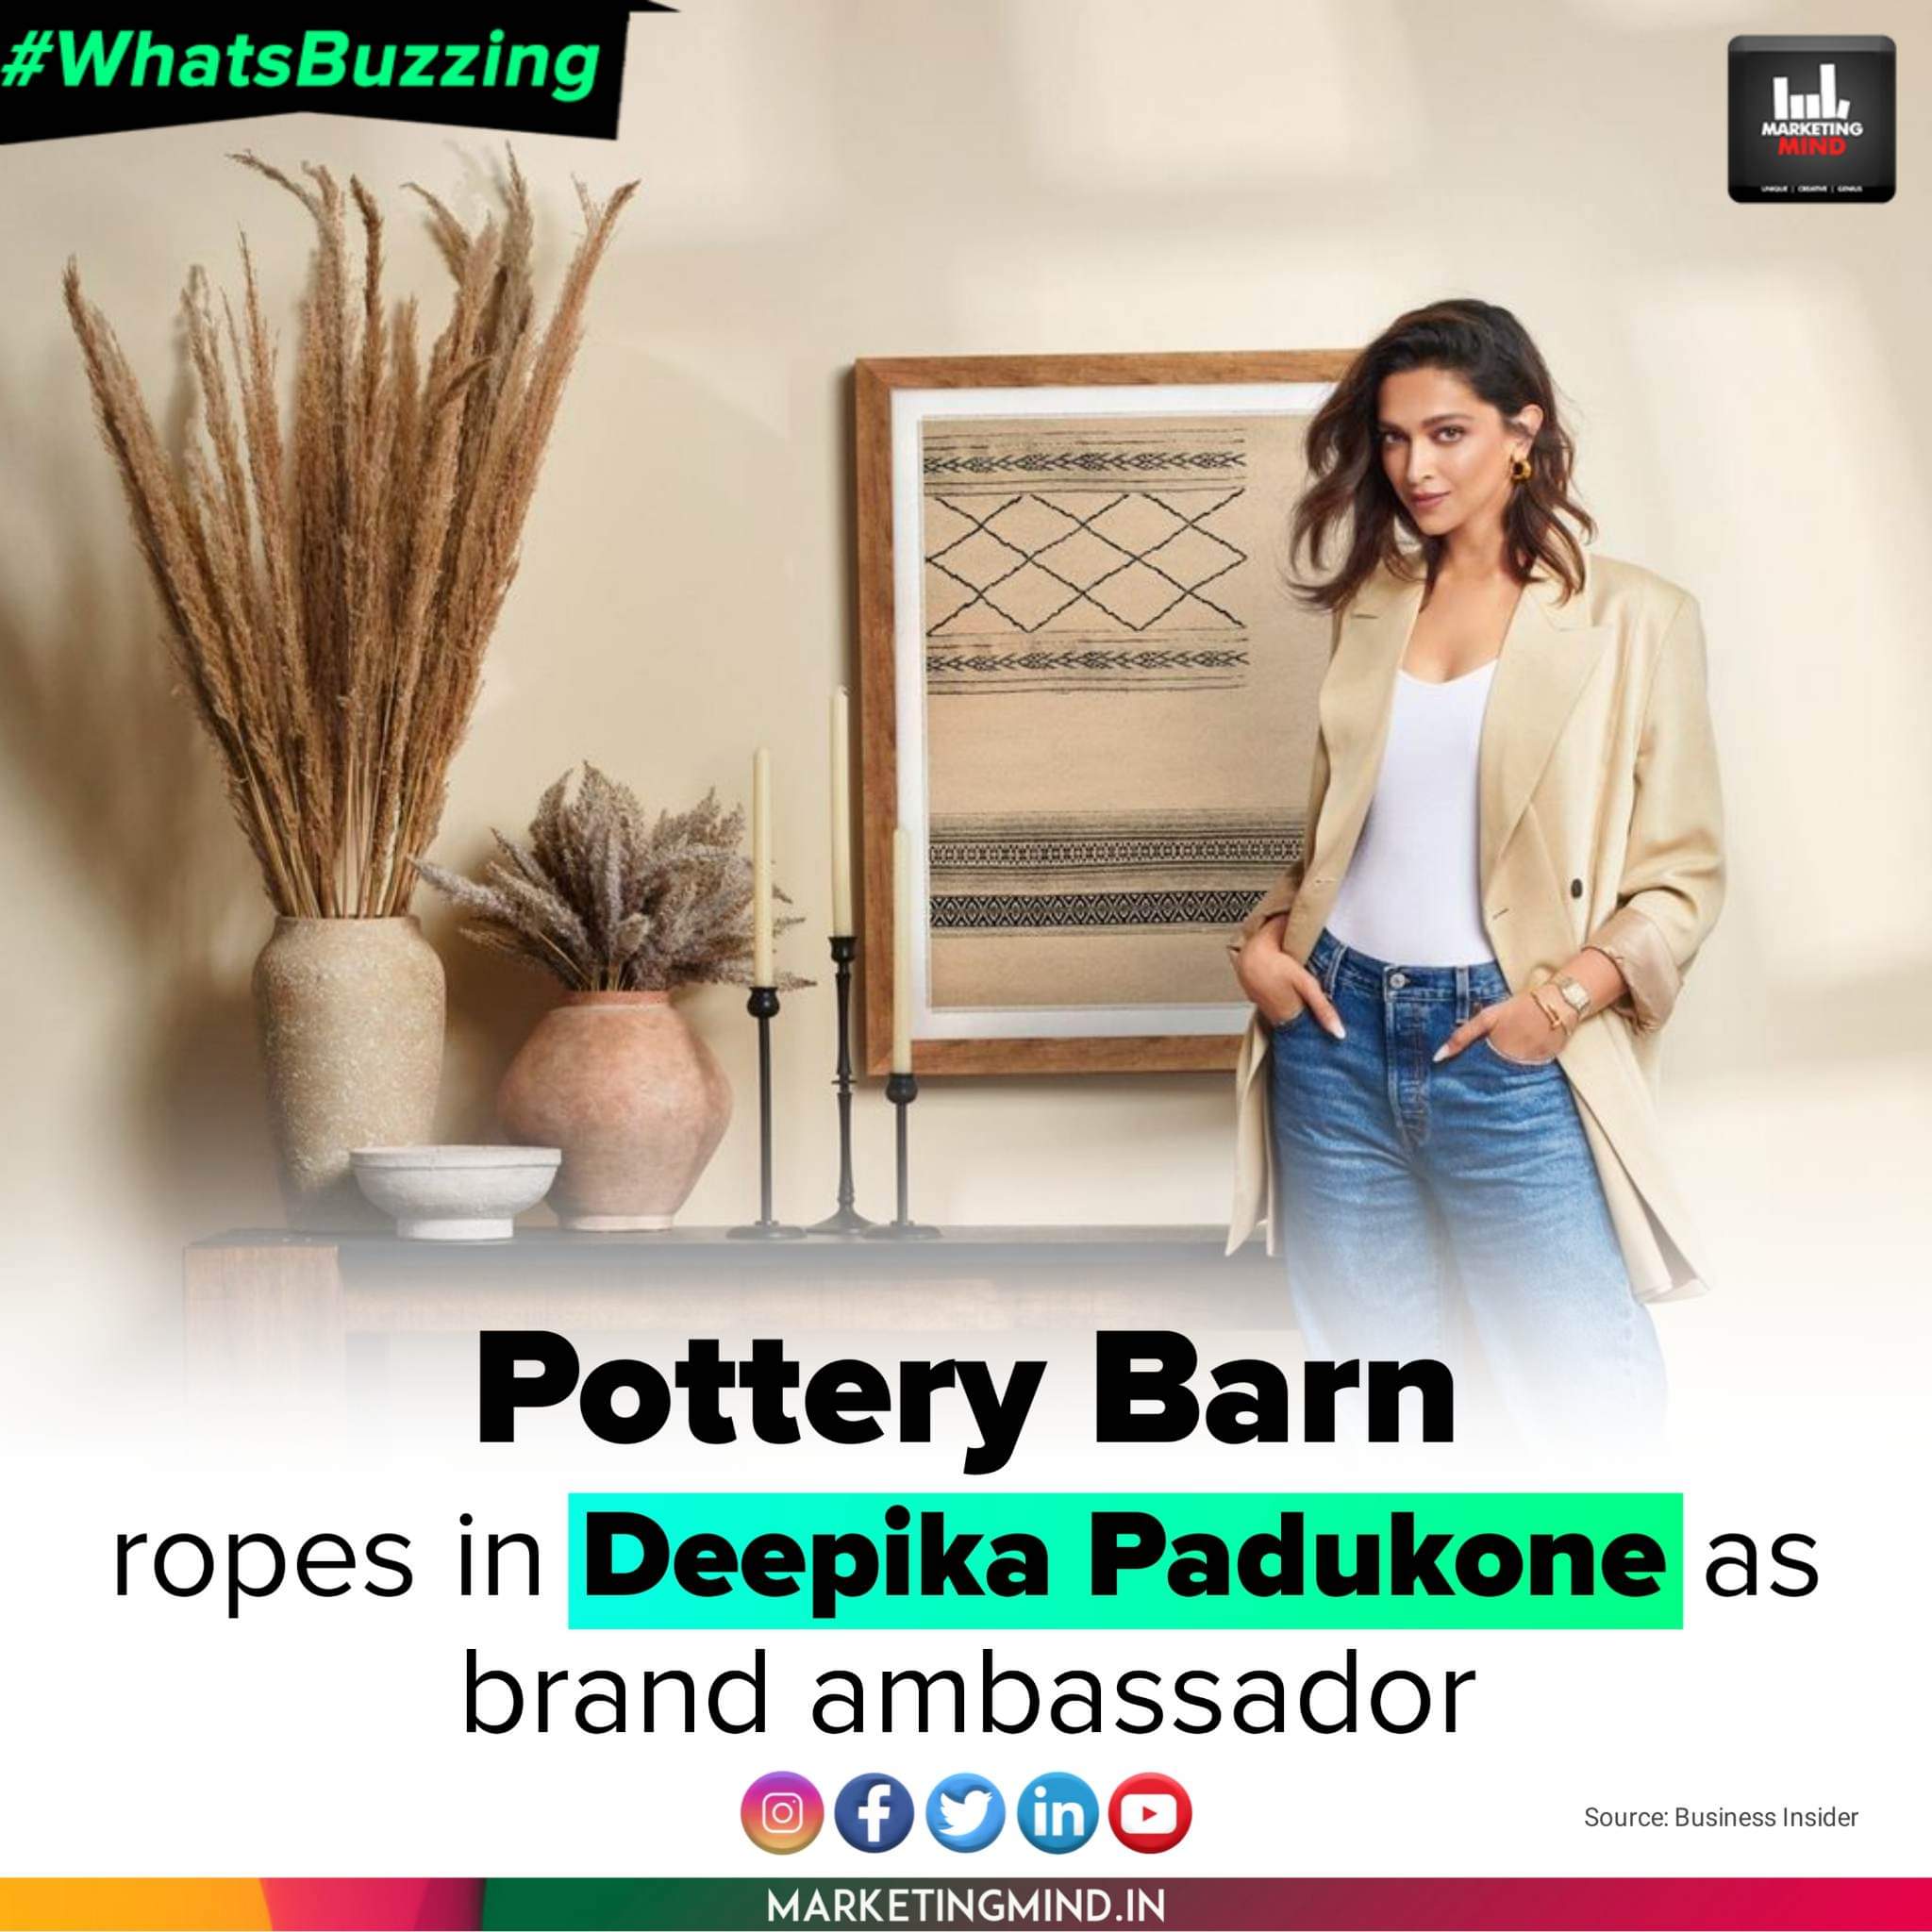 Pottery Barn signs Deepika Padukone as brand ambassador